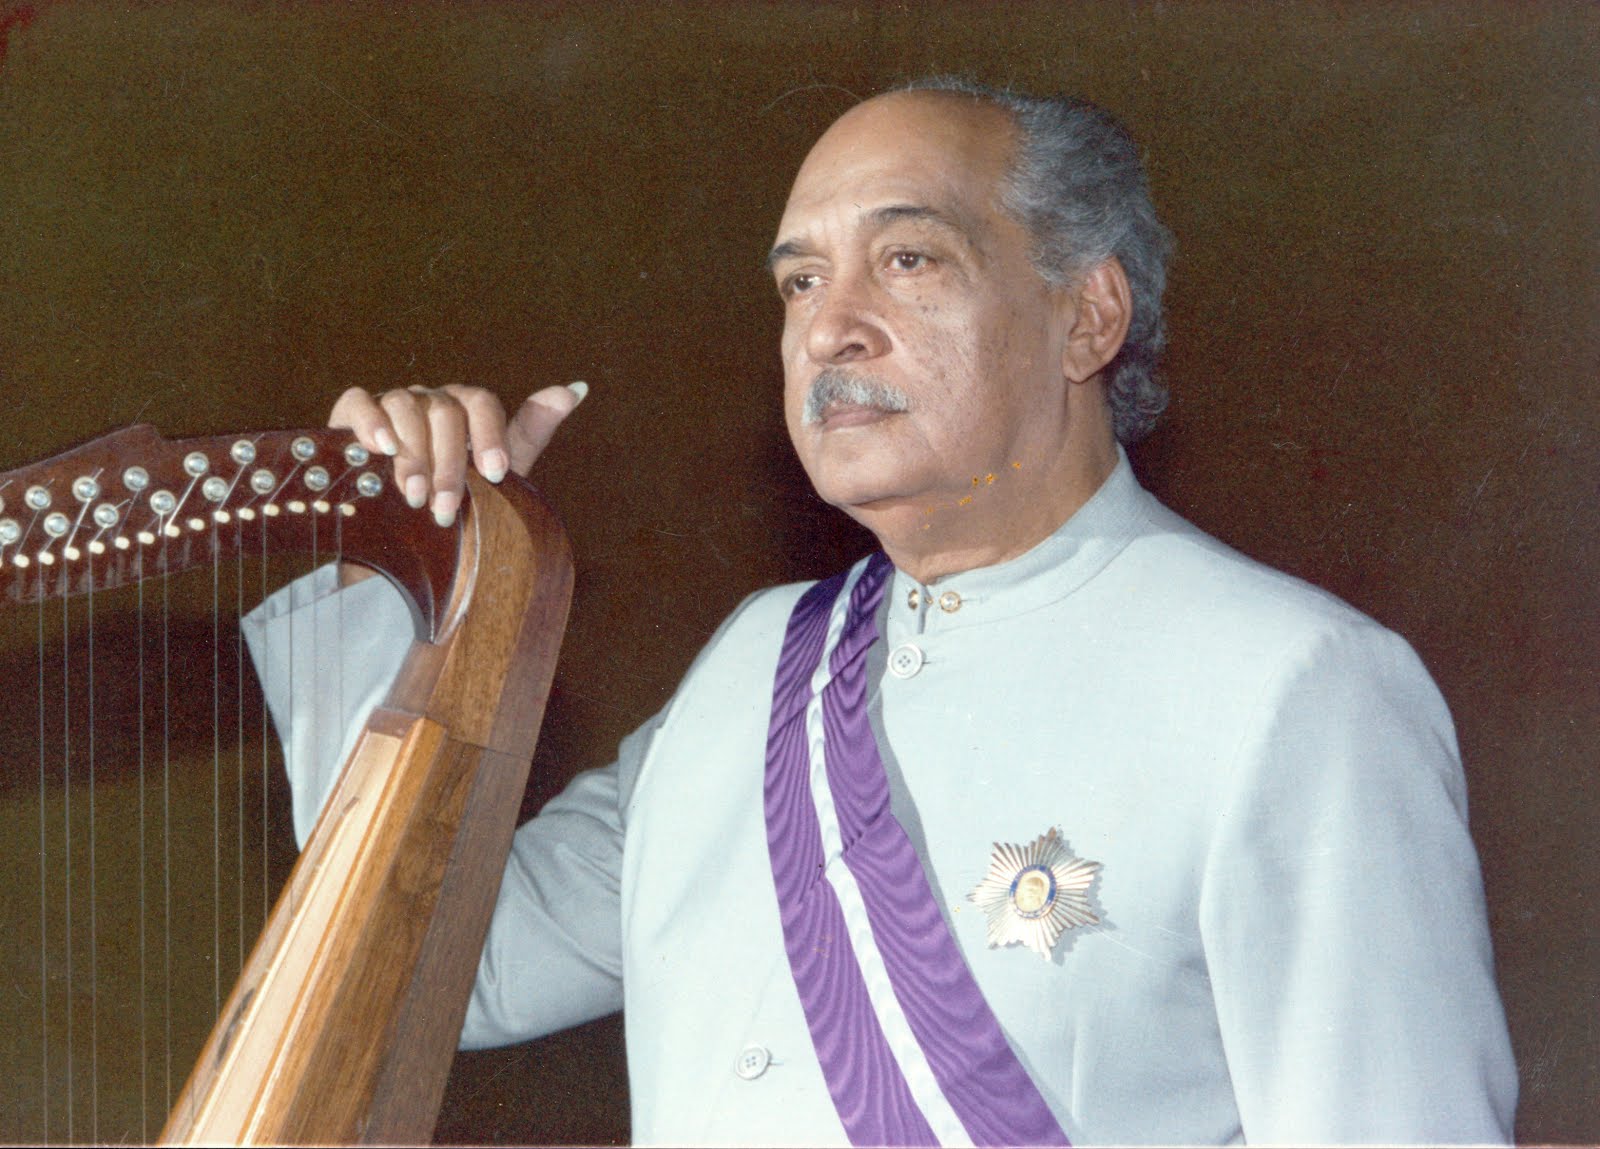 Maestro don Juan Vicente Torrealba